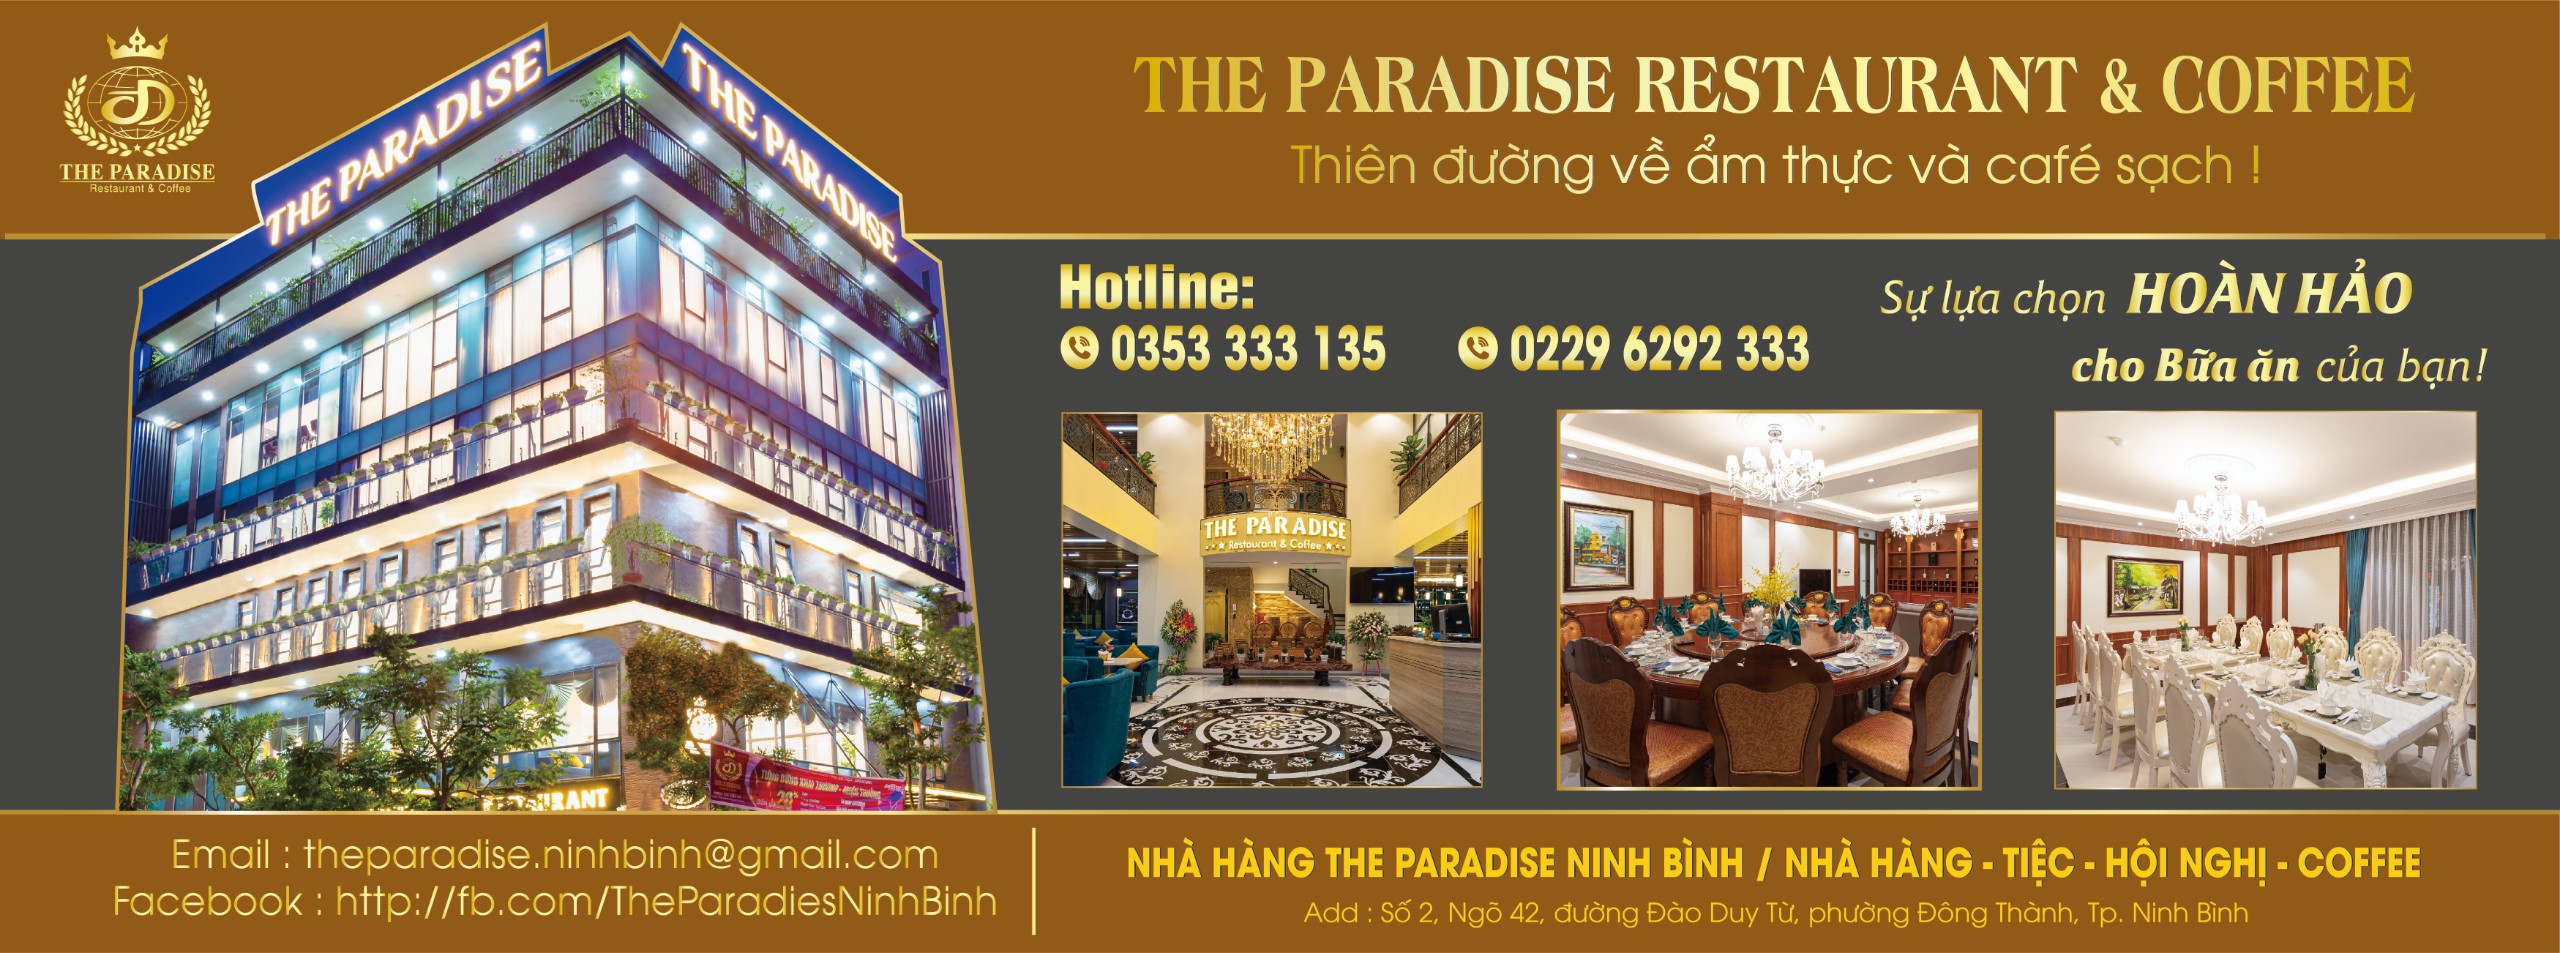 The Paradise Restaurant & Coffee Ninh Binh ảnh 1